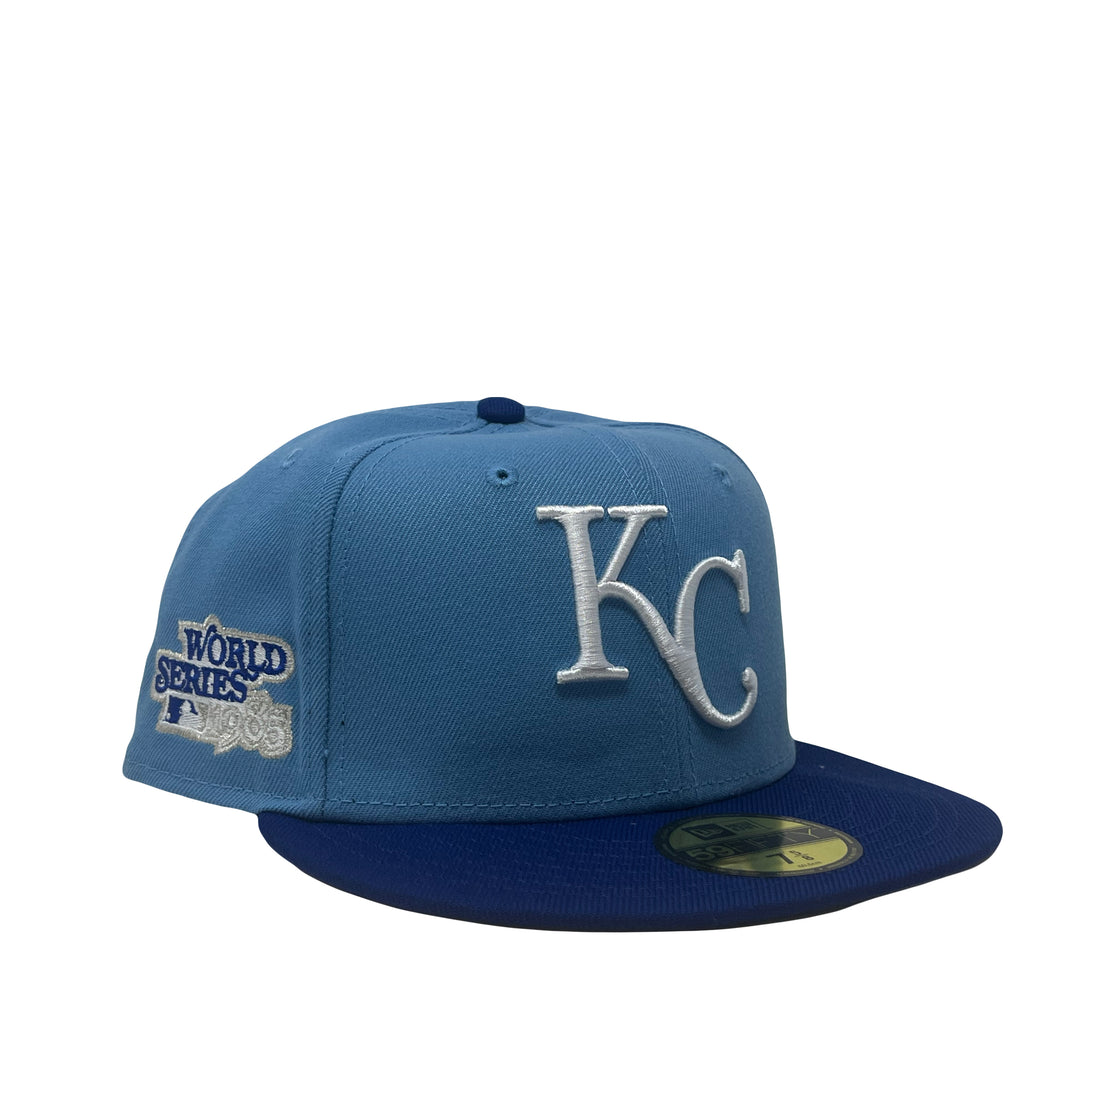 Kansas City Royals 1986 World Series Sky New Era Fitted Hat